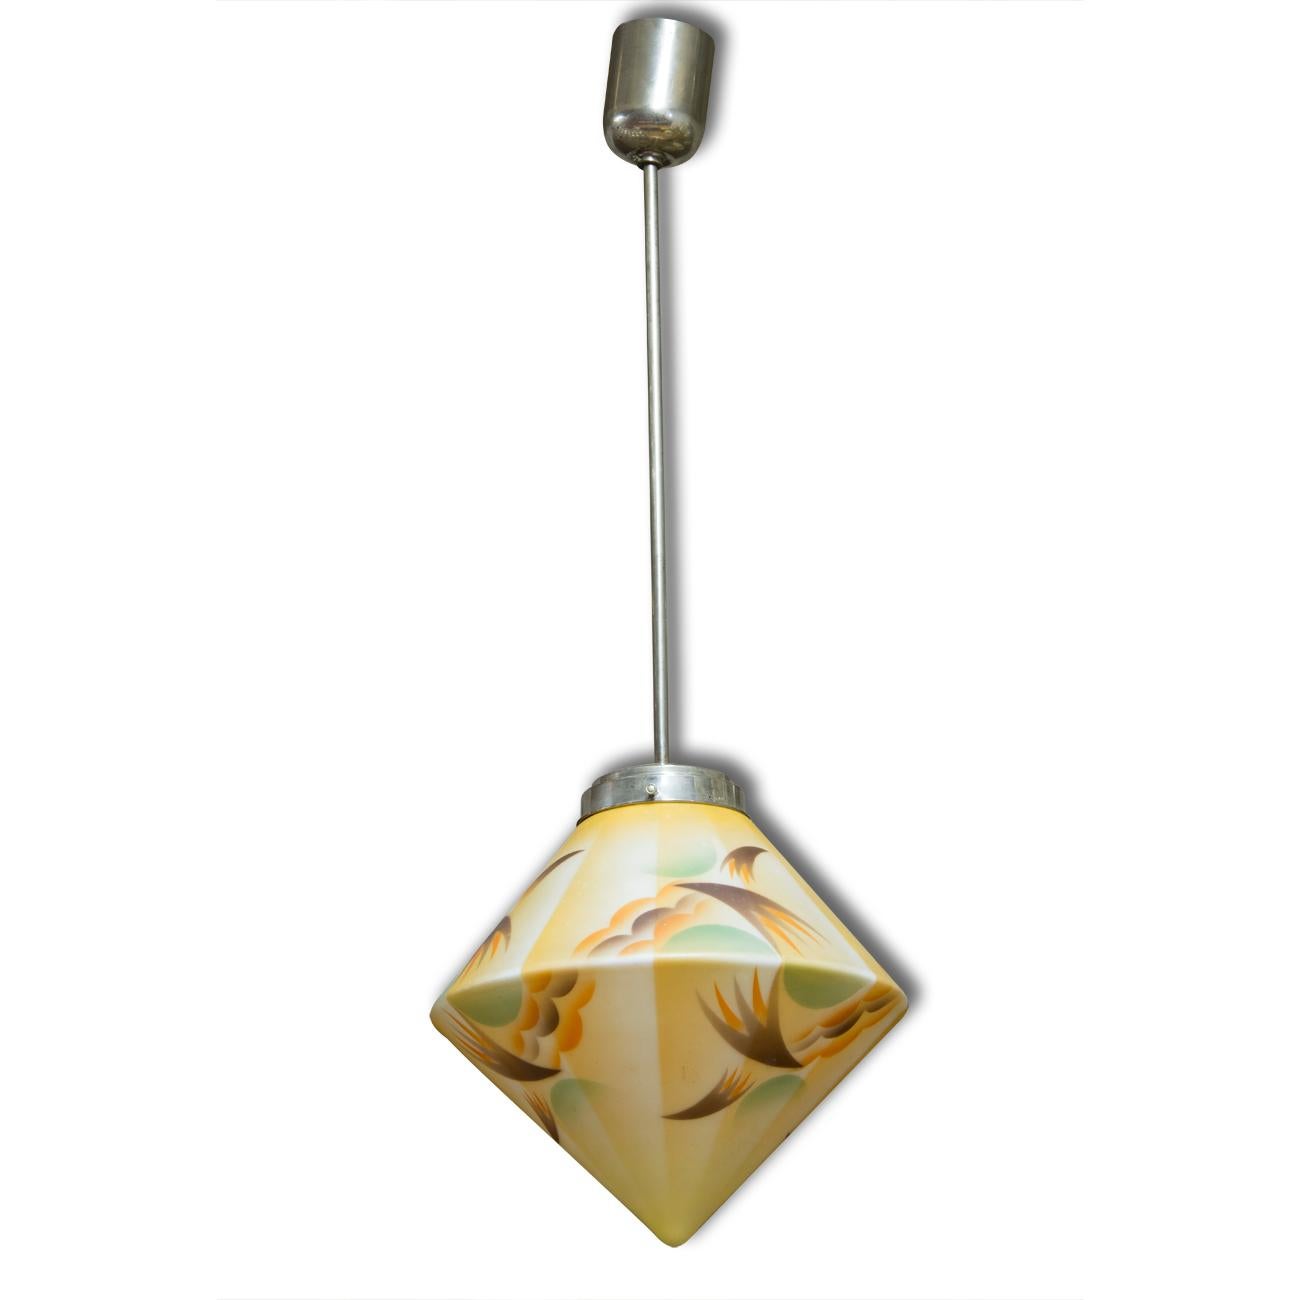 Czech Bauhaus Colorfull Pendant Lamp, 1930s, Middle Europe